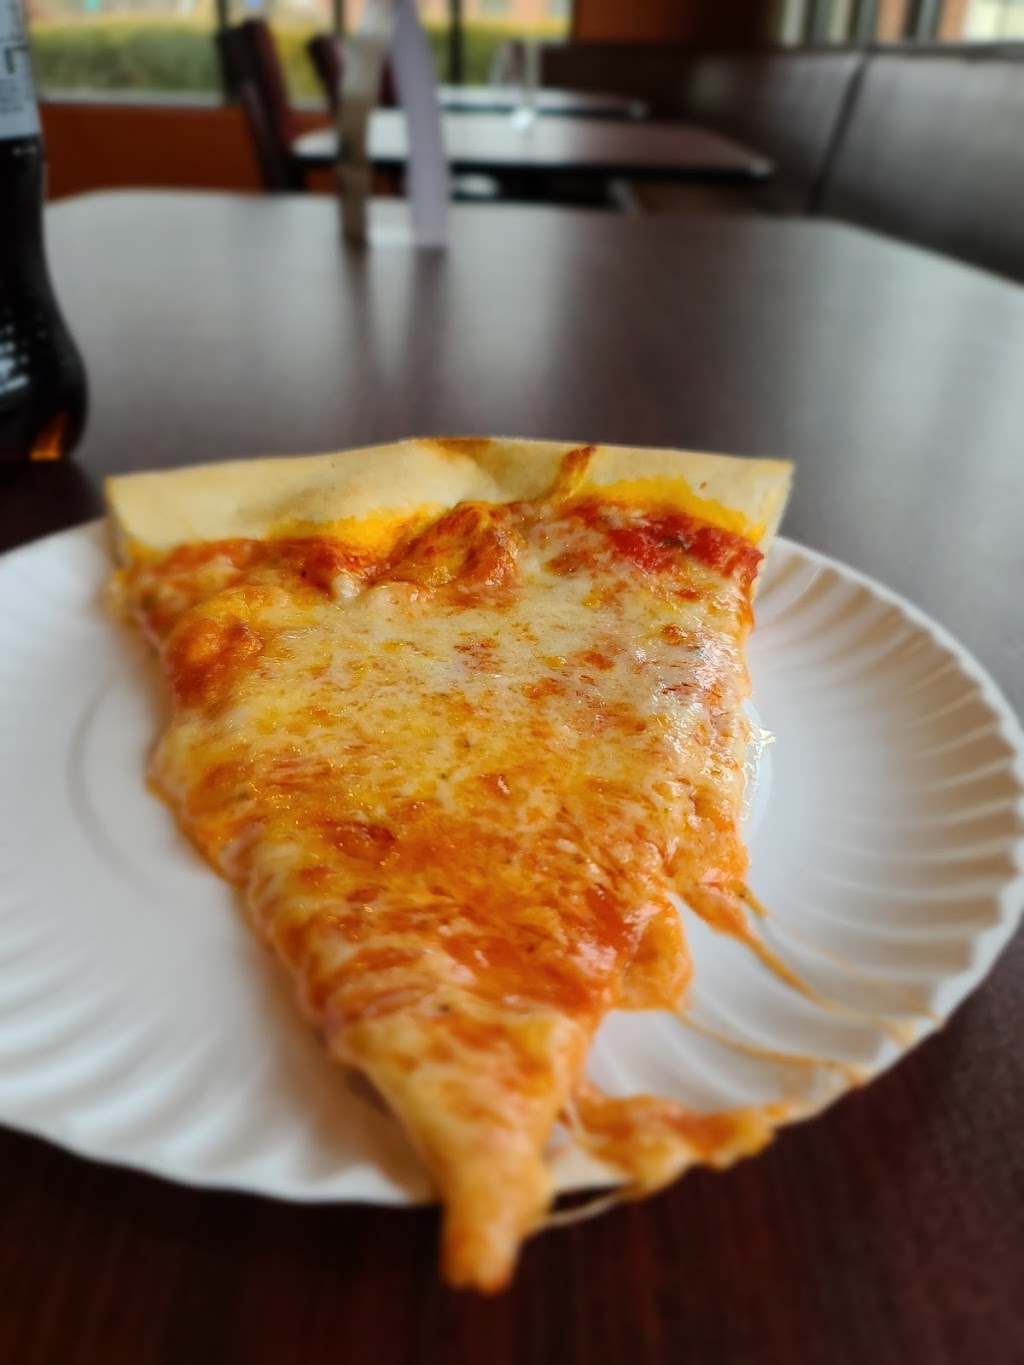 Mancinos Pizza & Italian Cuisine | 490 E Main St, Denville, NJ 07834, USA | Phone: (862) 209-4751